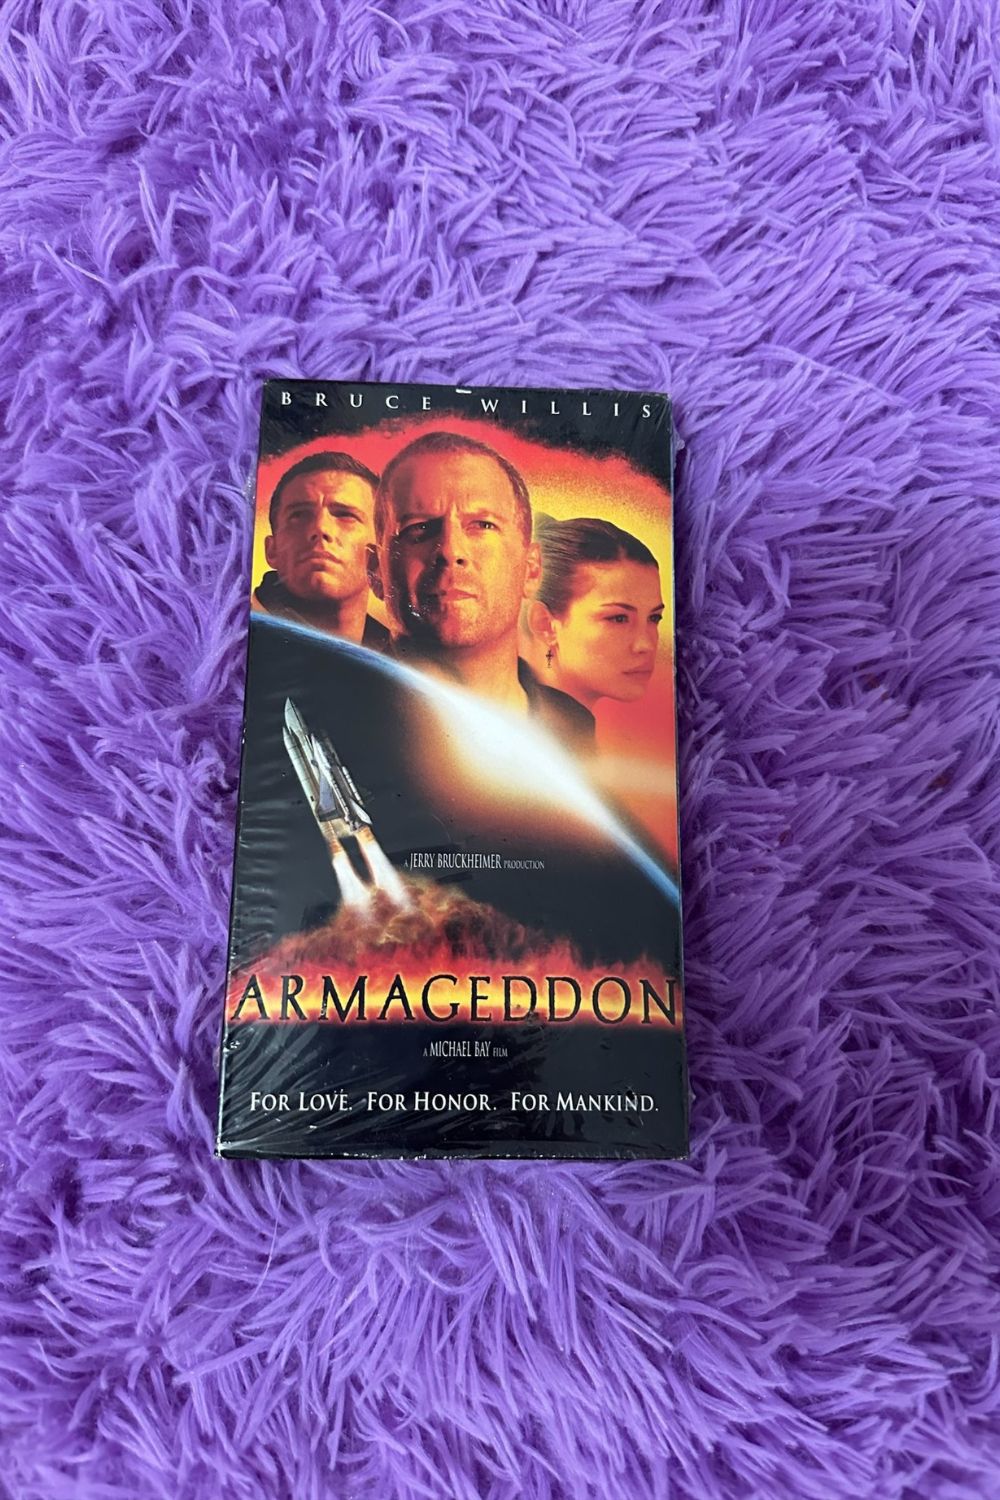 ARMAGEDDON VHS*